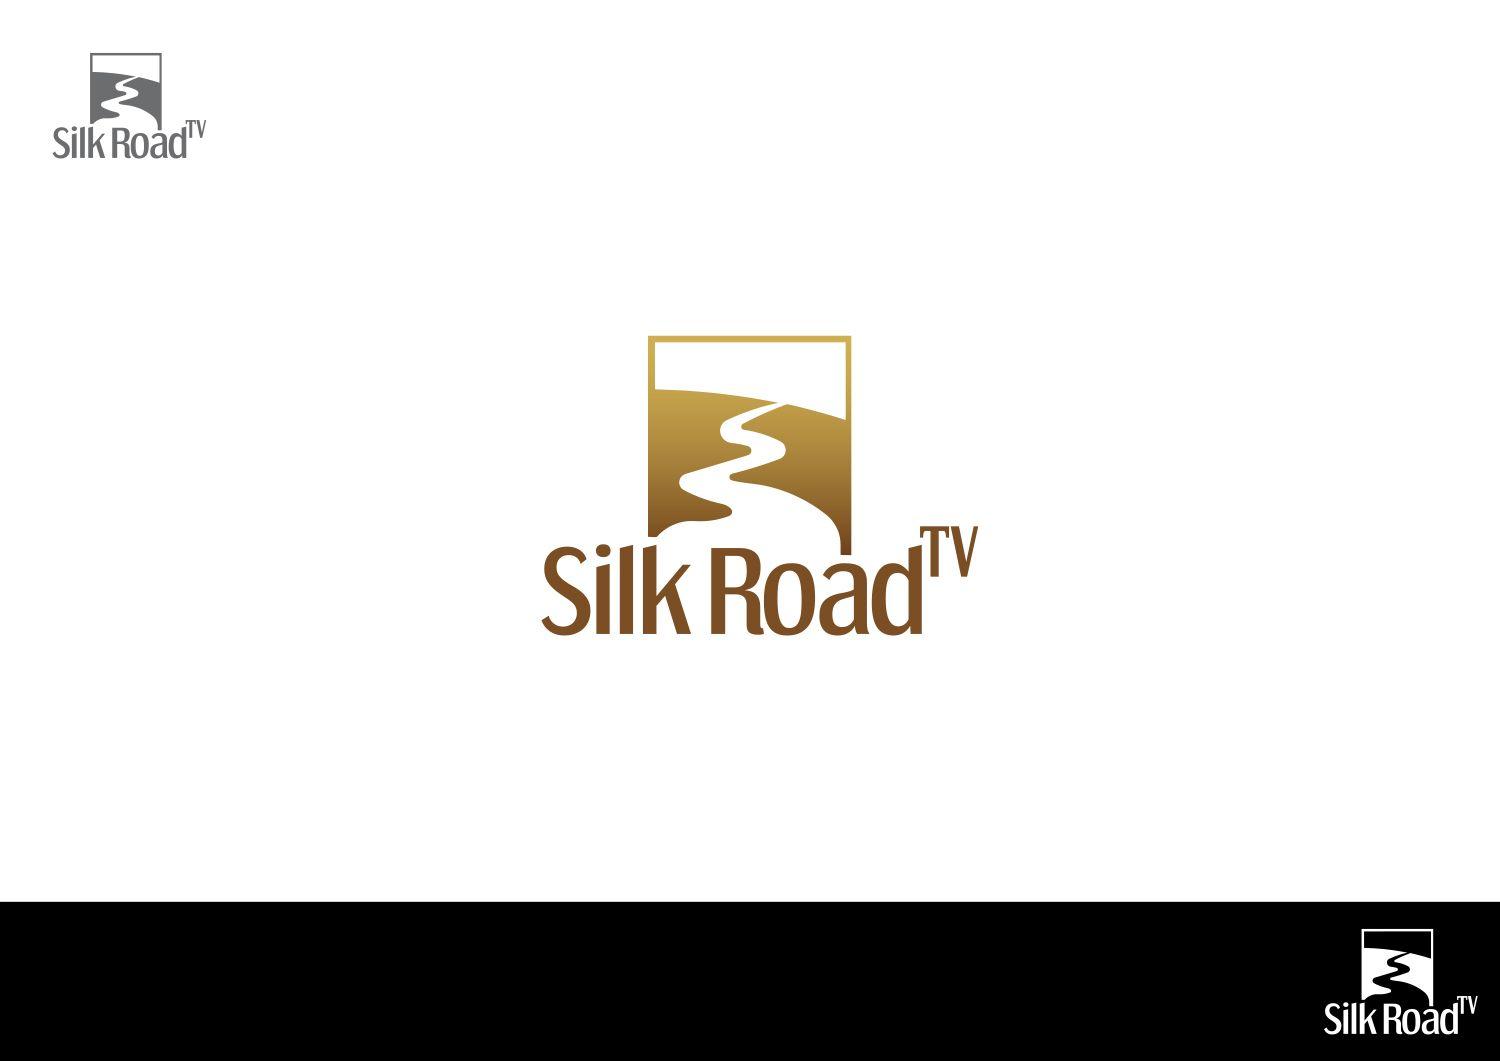 Road Logo - Professional, Bold, Television Station Logo Design for Silk Road TV